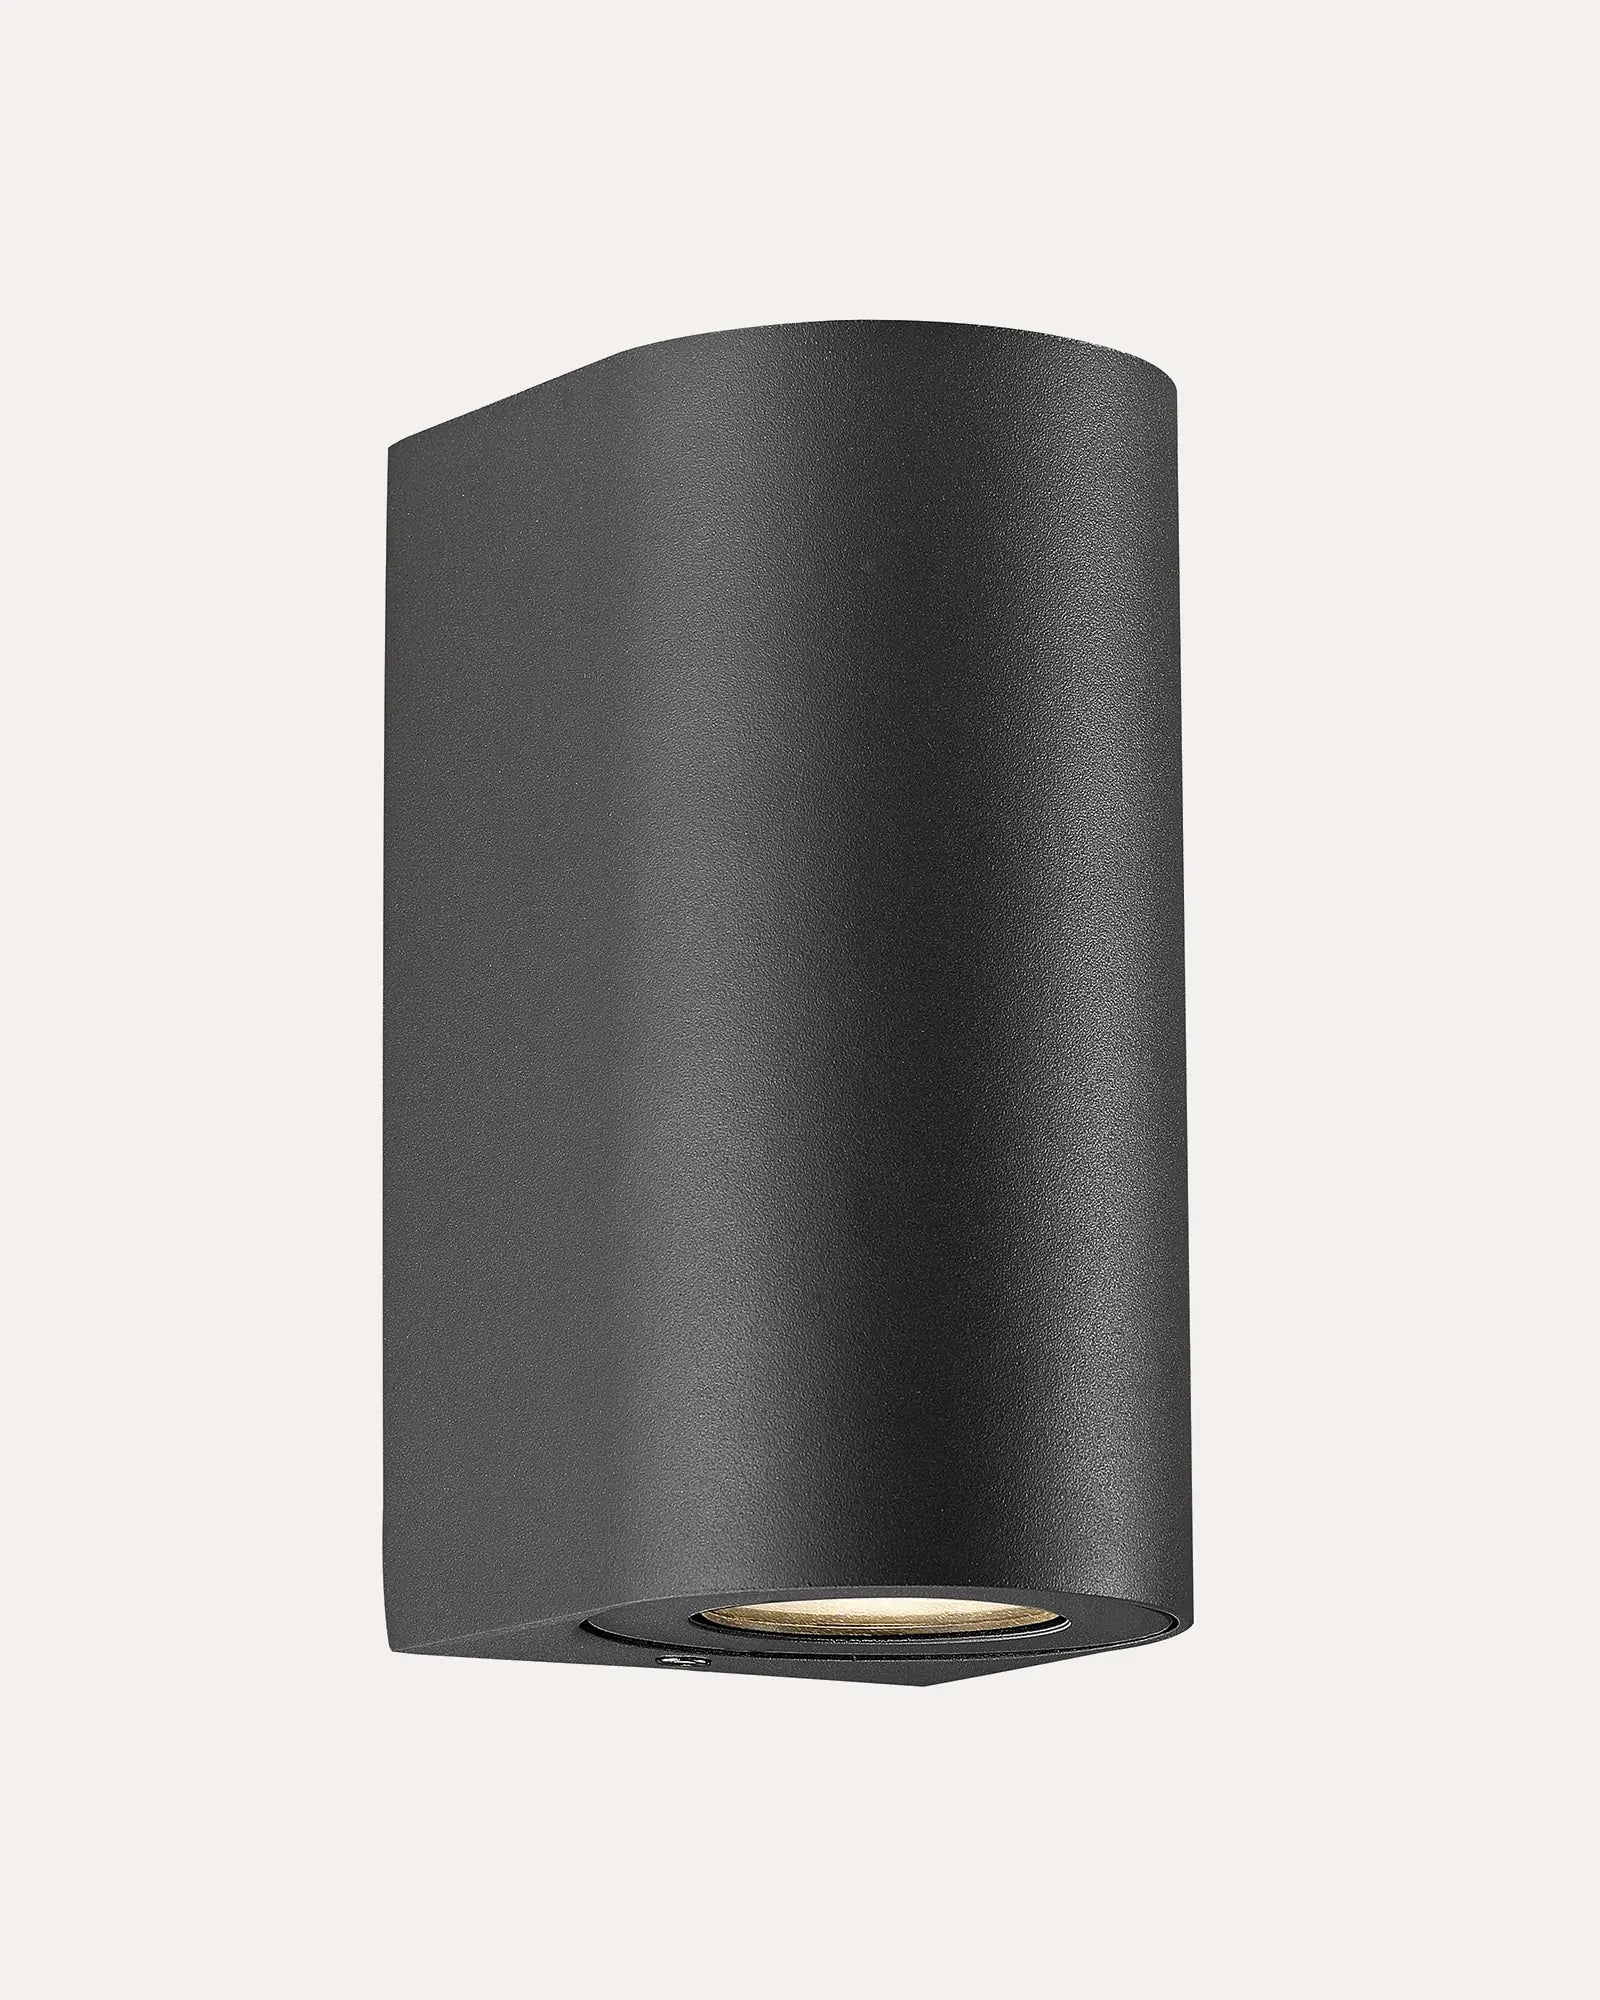 Canto 2 Maxi minimal Scandinavian outdoor cylinder wall light black